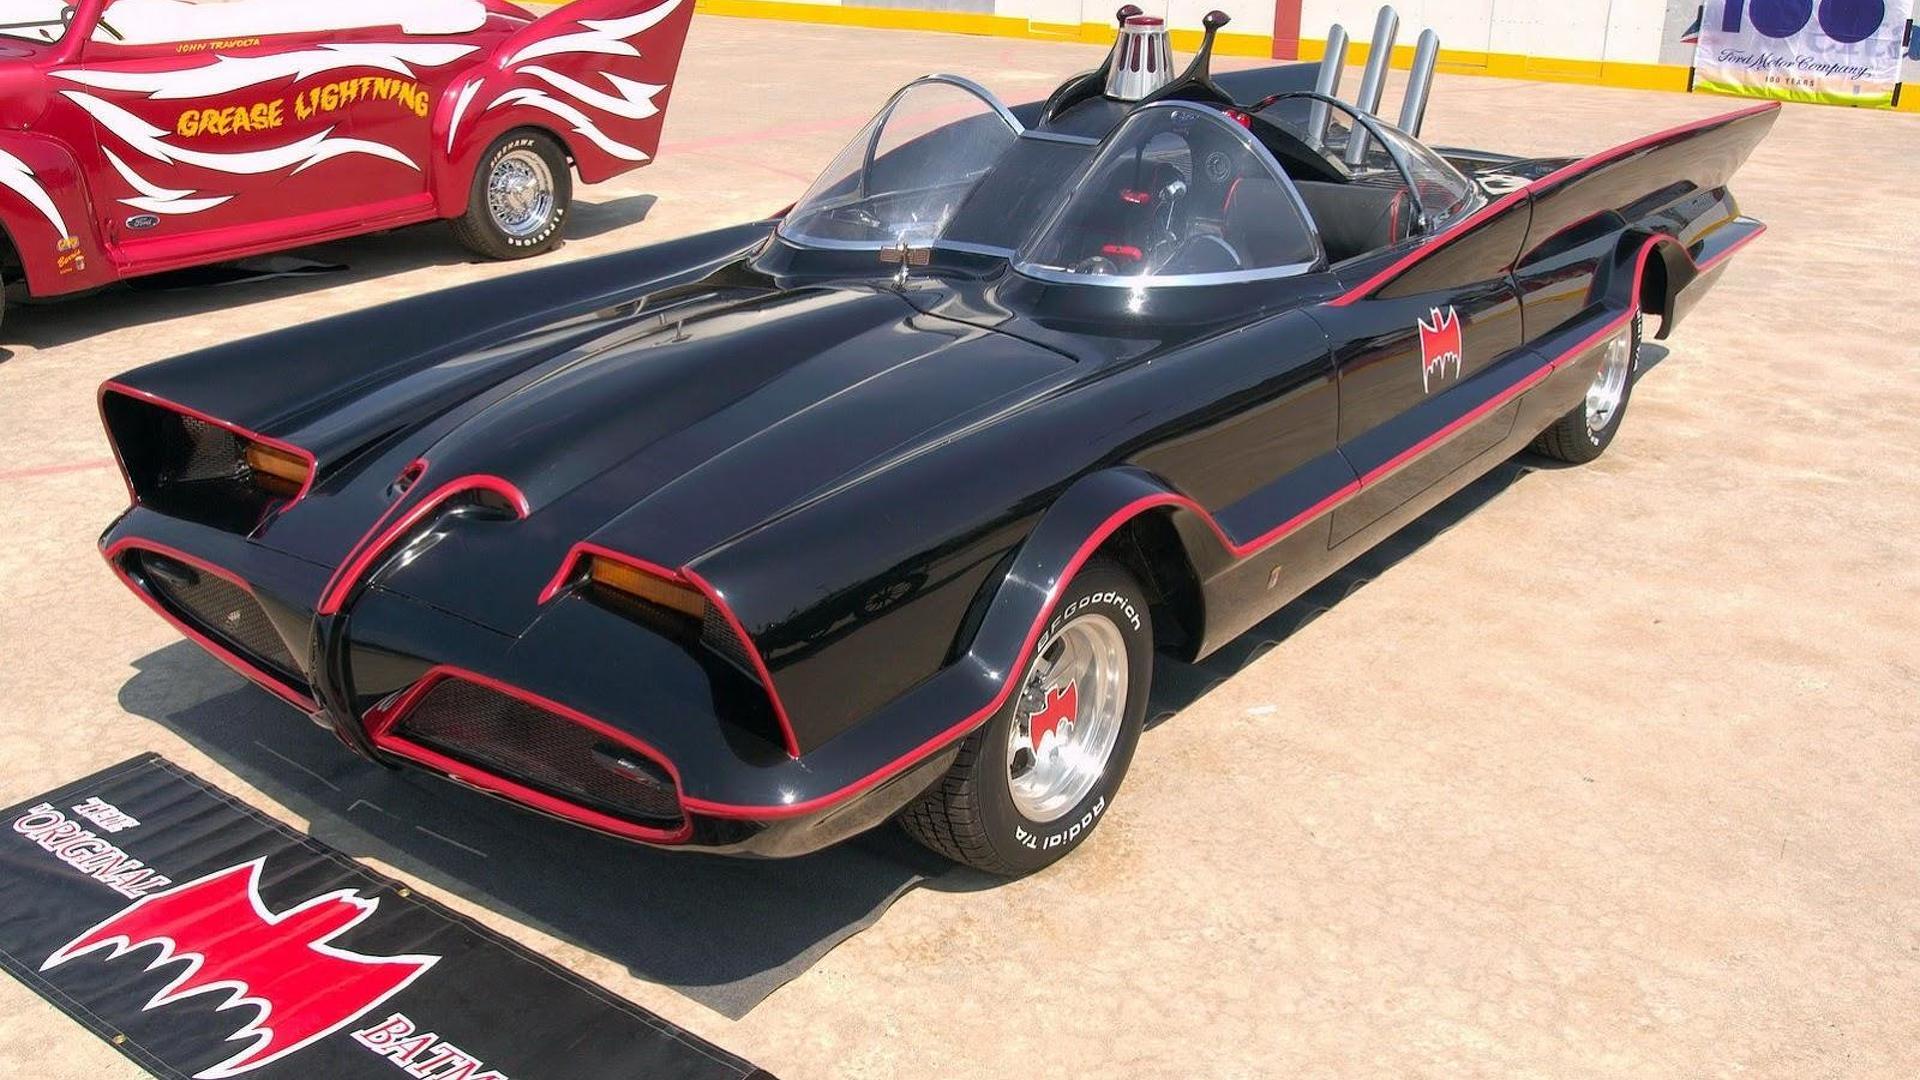 Original 1966 Batmobile Sold At Barrett Jackson For 4.62M USD [video]